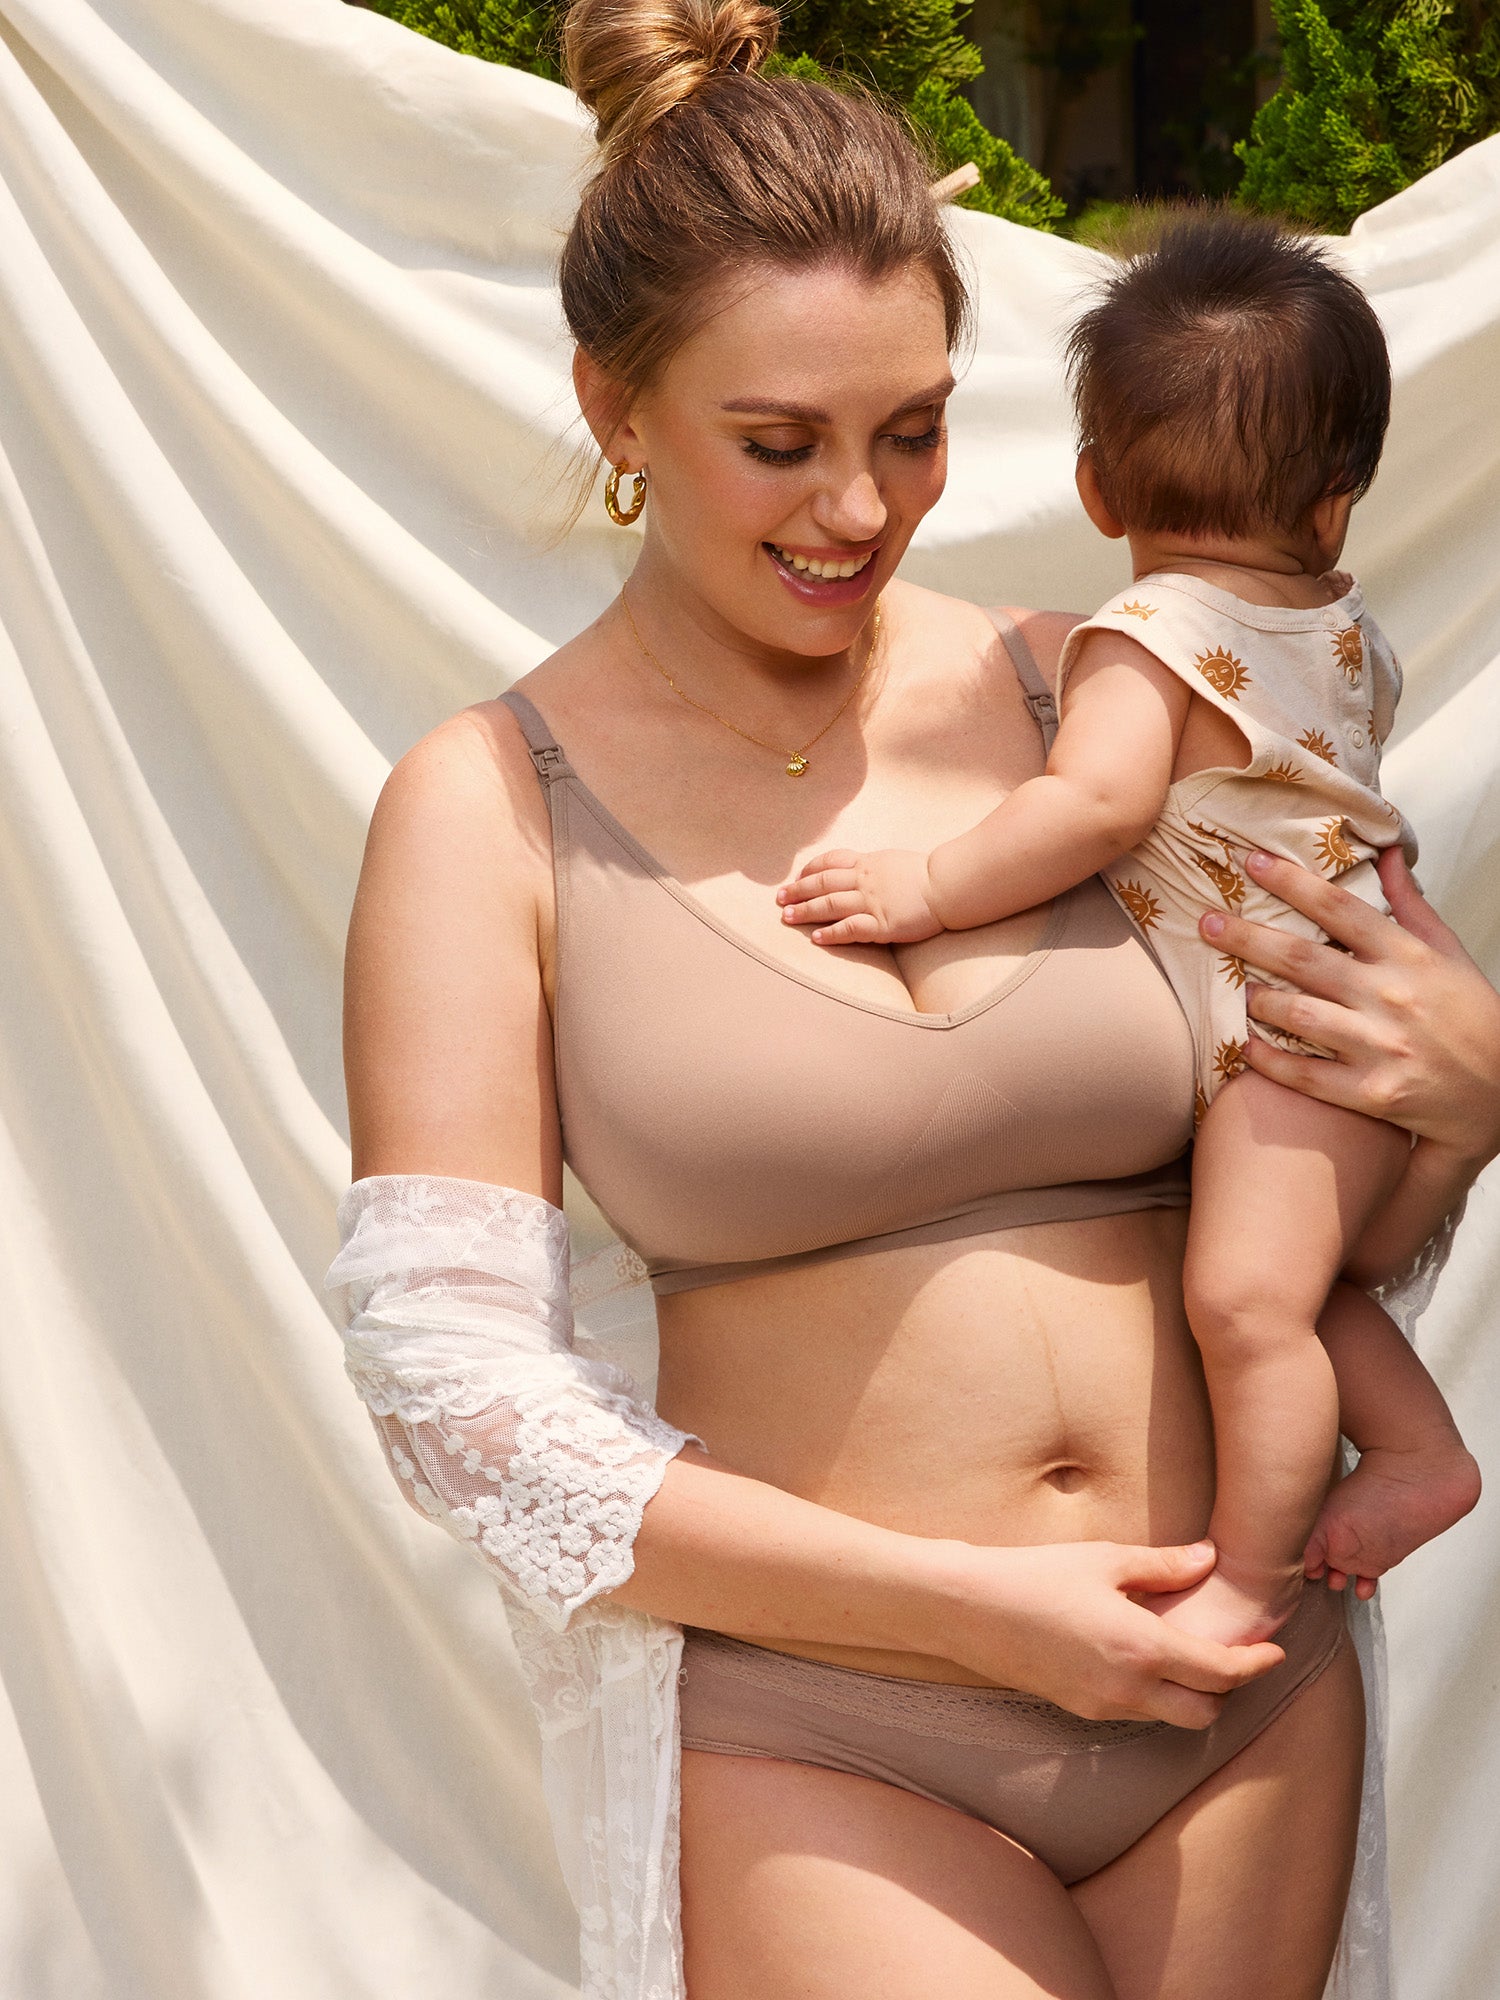 MOMANDA on Instagram: Thank you @momanda 🫶🏻for these cute and comfy nursing  bras! Via @kaylamcarterr #momandamoment #momanda #nursingbralette  #postpartum #nursingmom #4thtrimester #bumpstyle #breastfeedingjourney